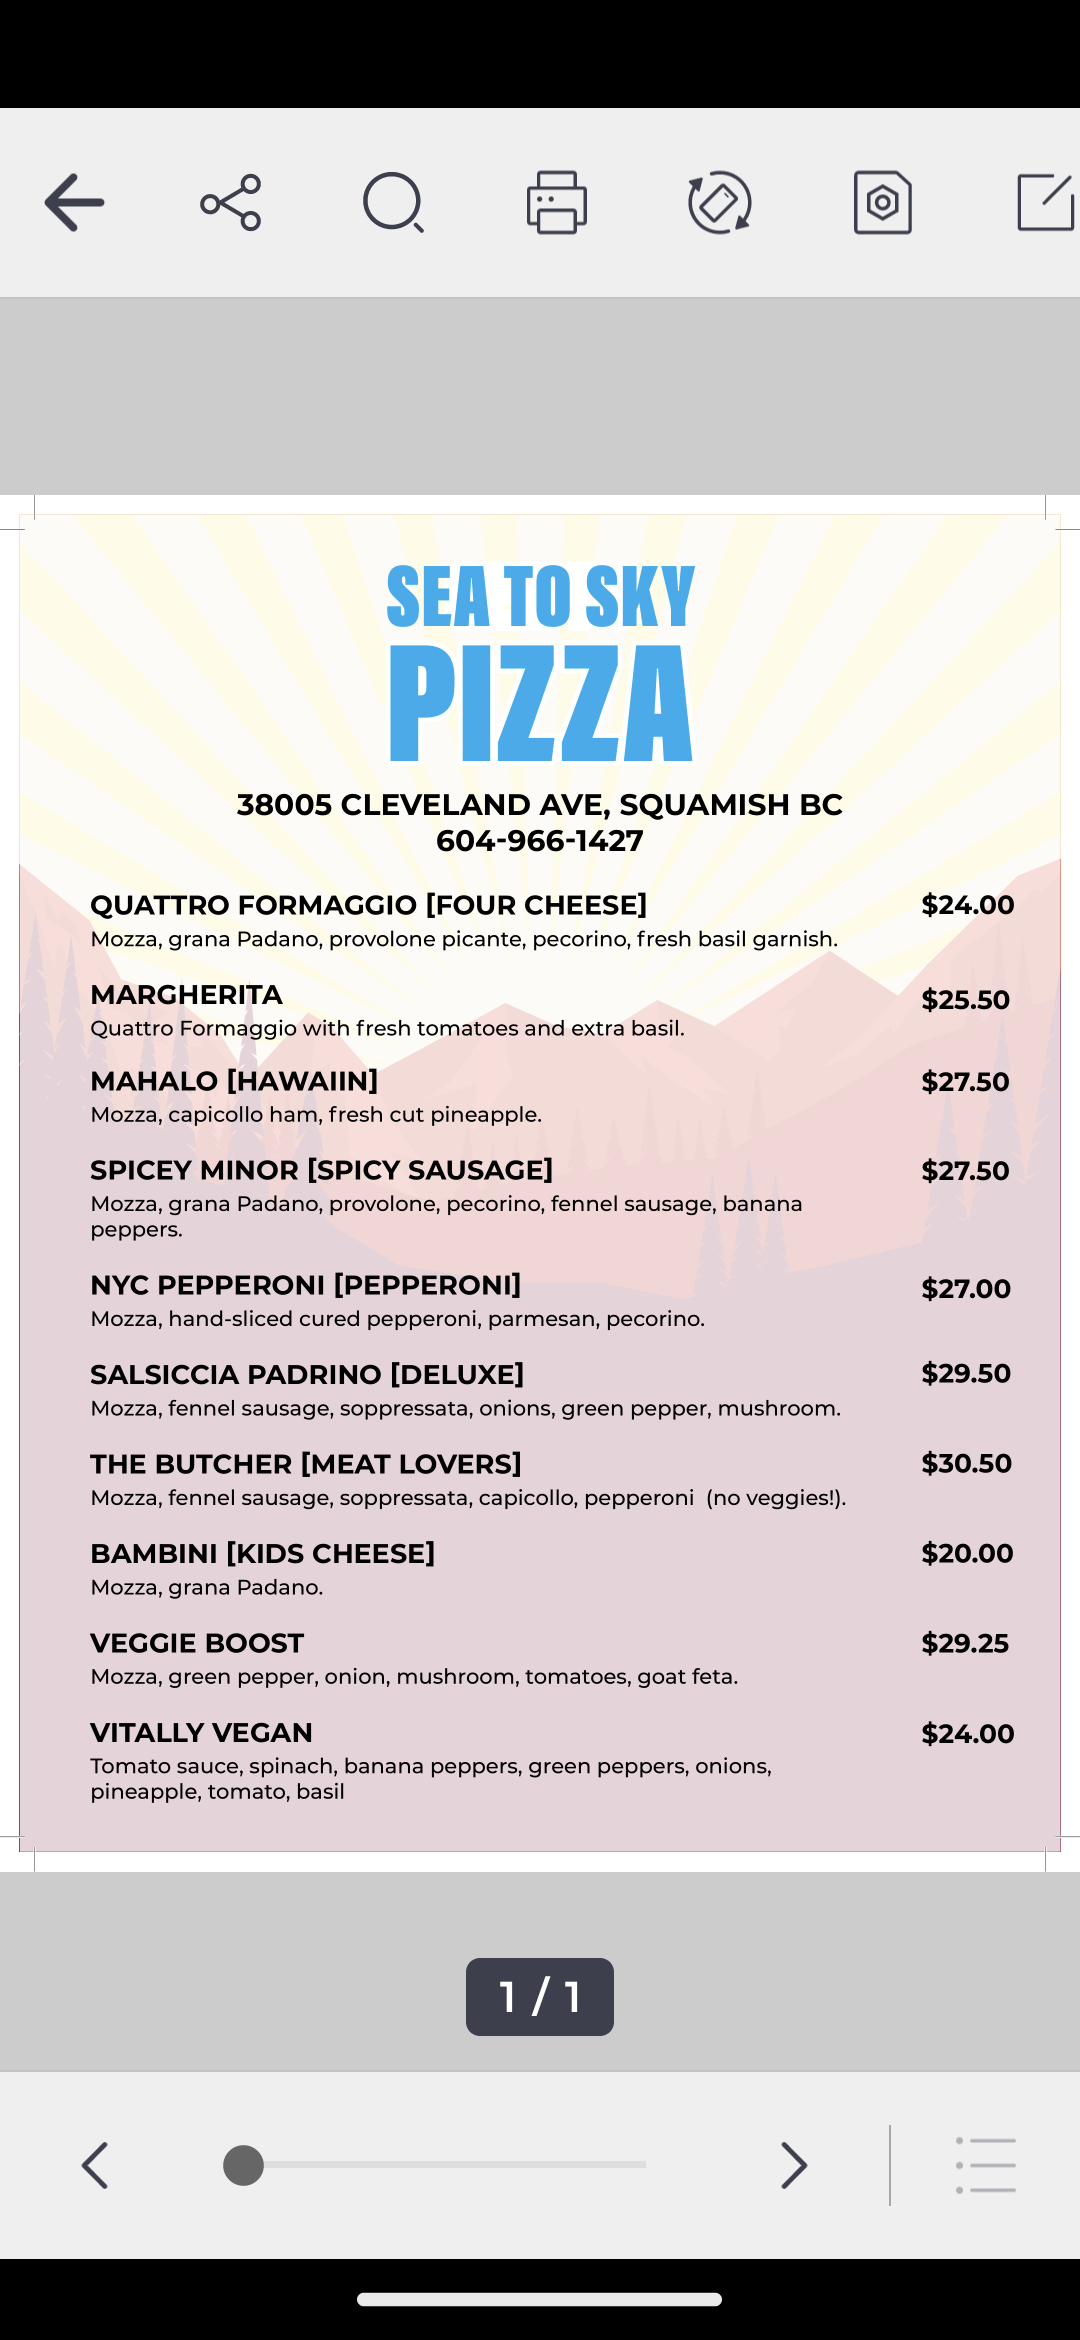 Sea to Sky Pizza Inside the Cleveland Tavern Bar, 38005 Cleveland Ave, Squamish, BC V8B 0C3